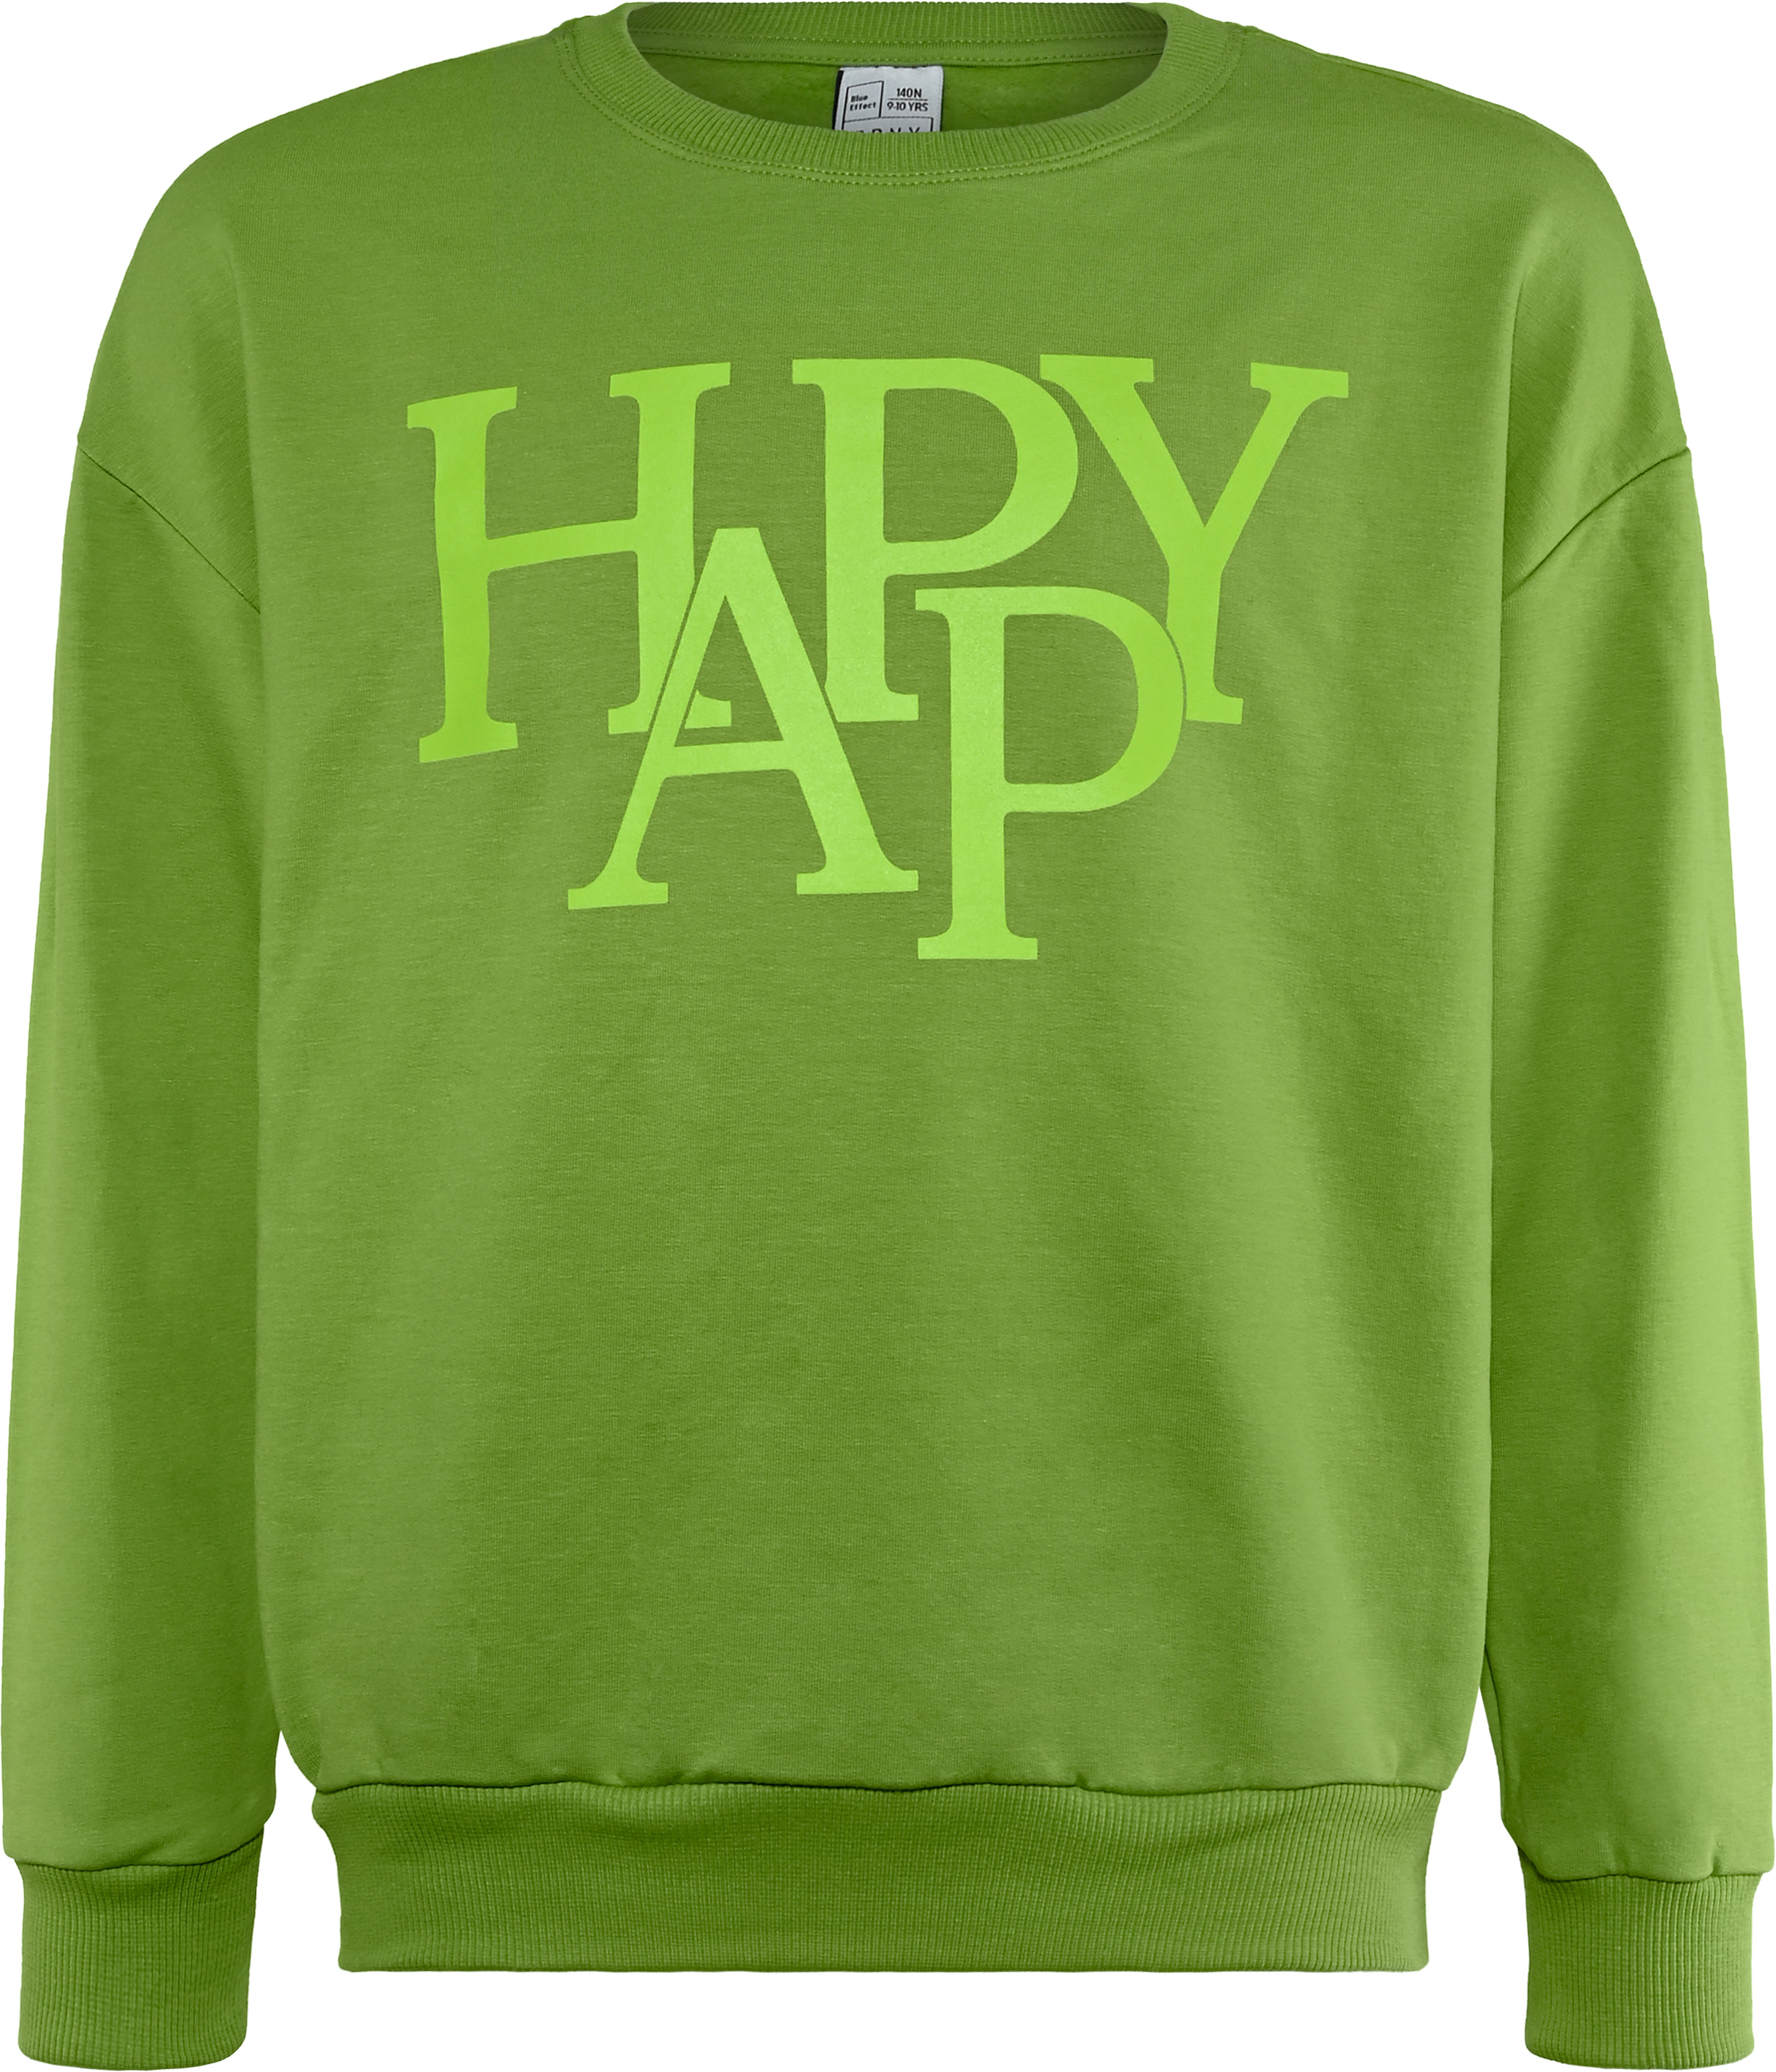 5894-JRNY Girls Sweatshirt -Happy